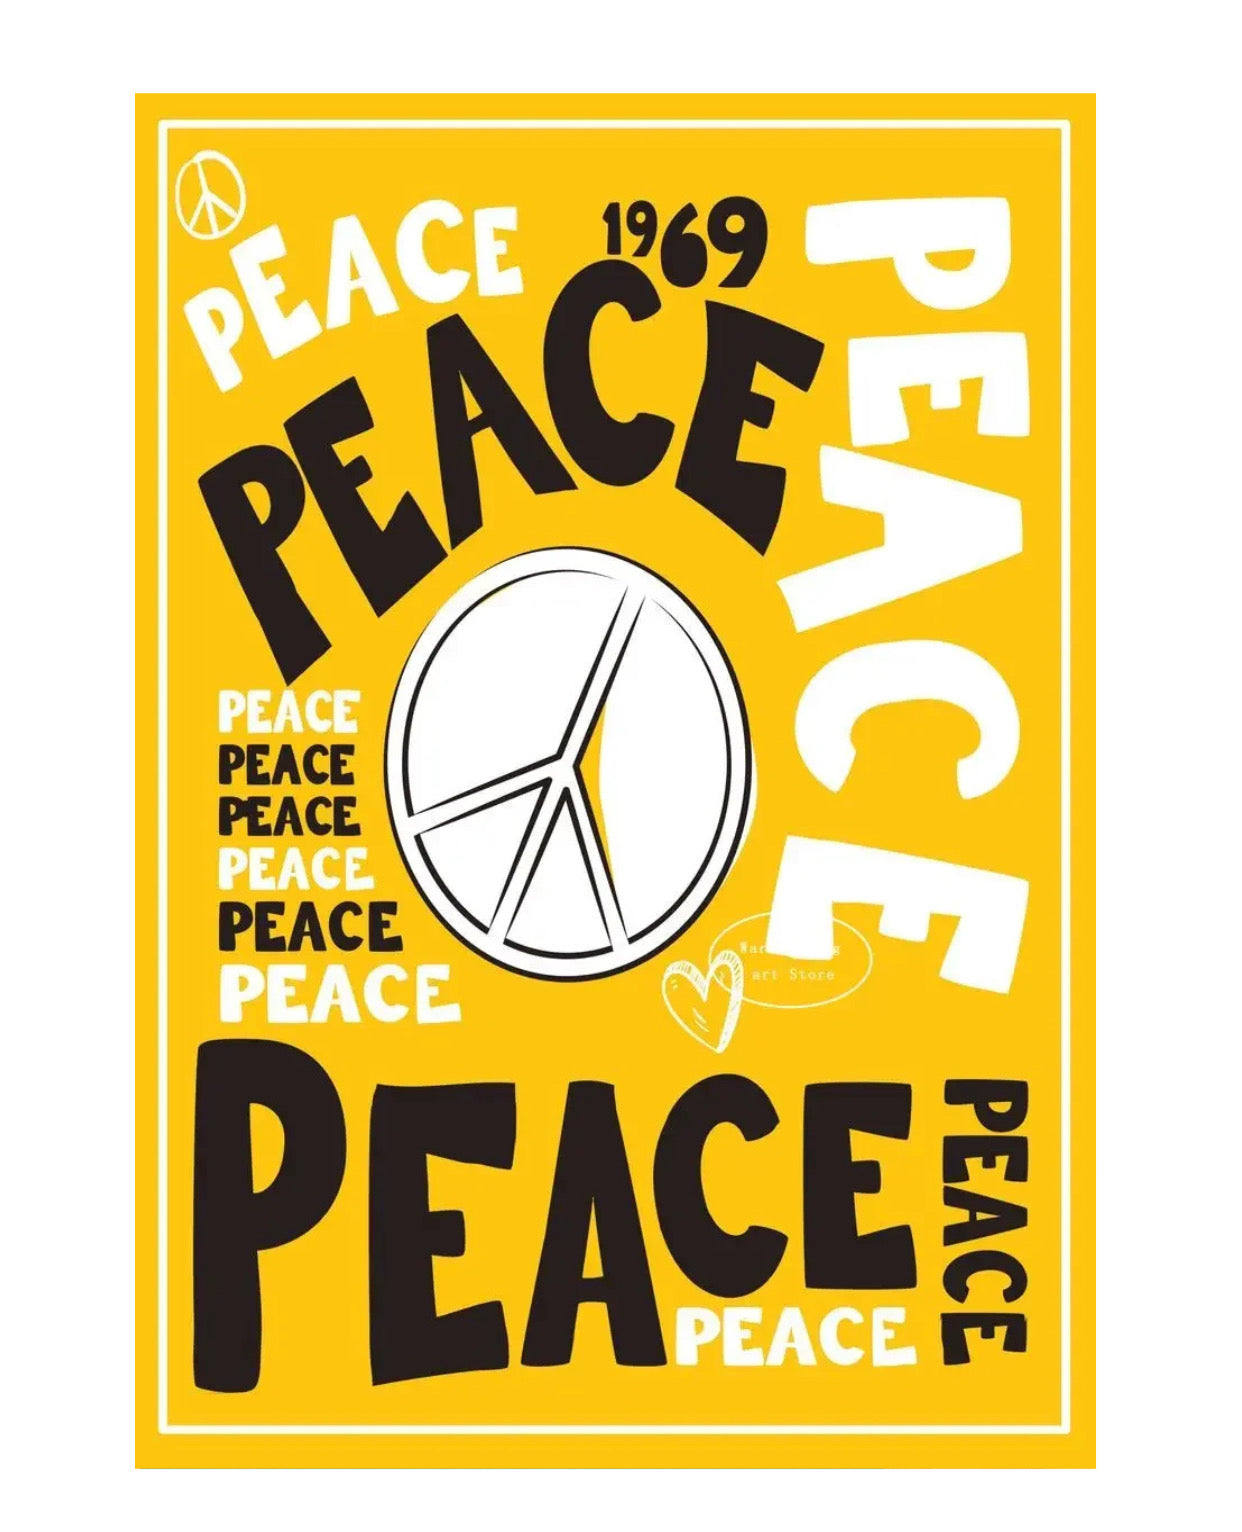 "peace, peace" poster